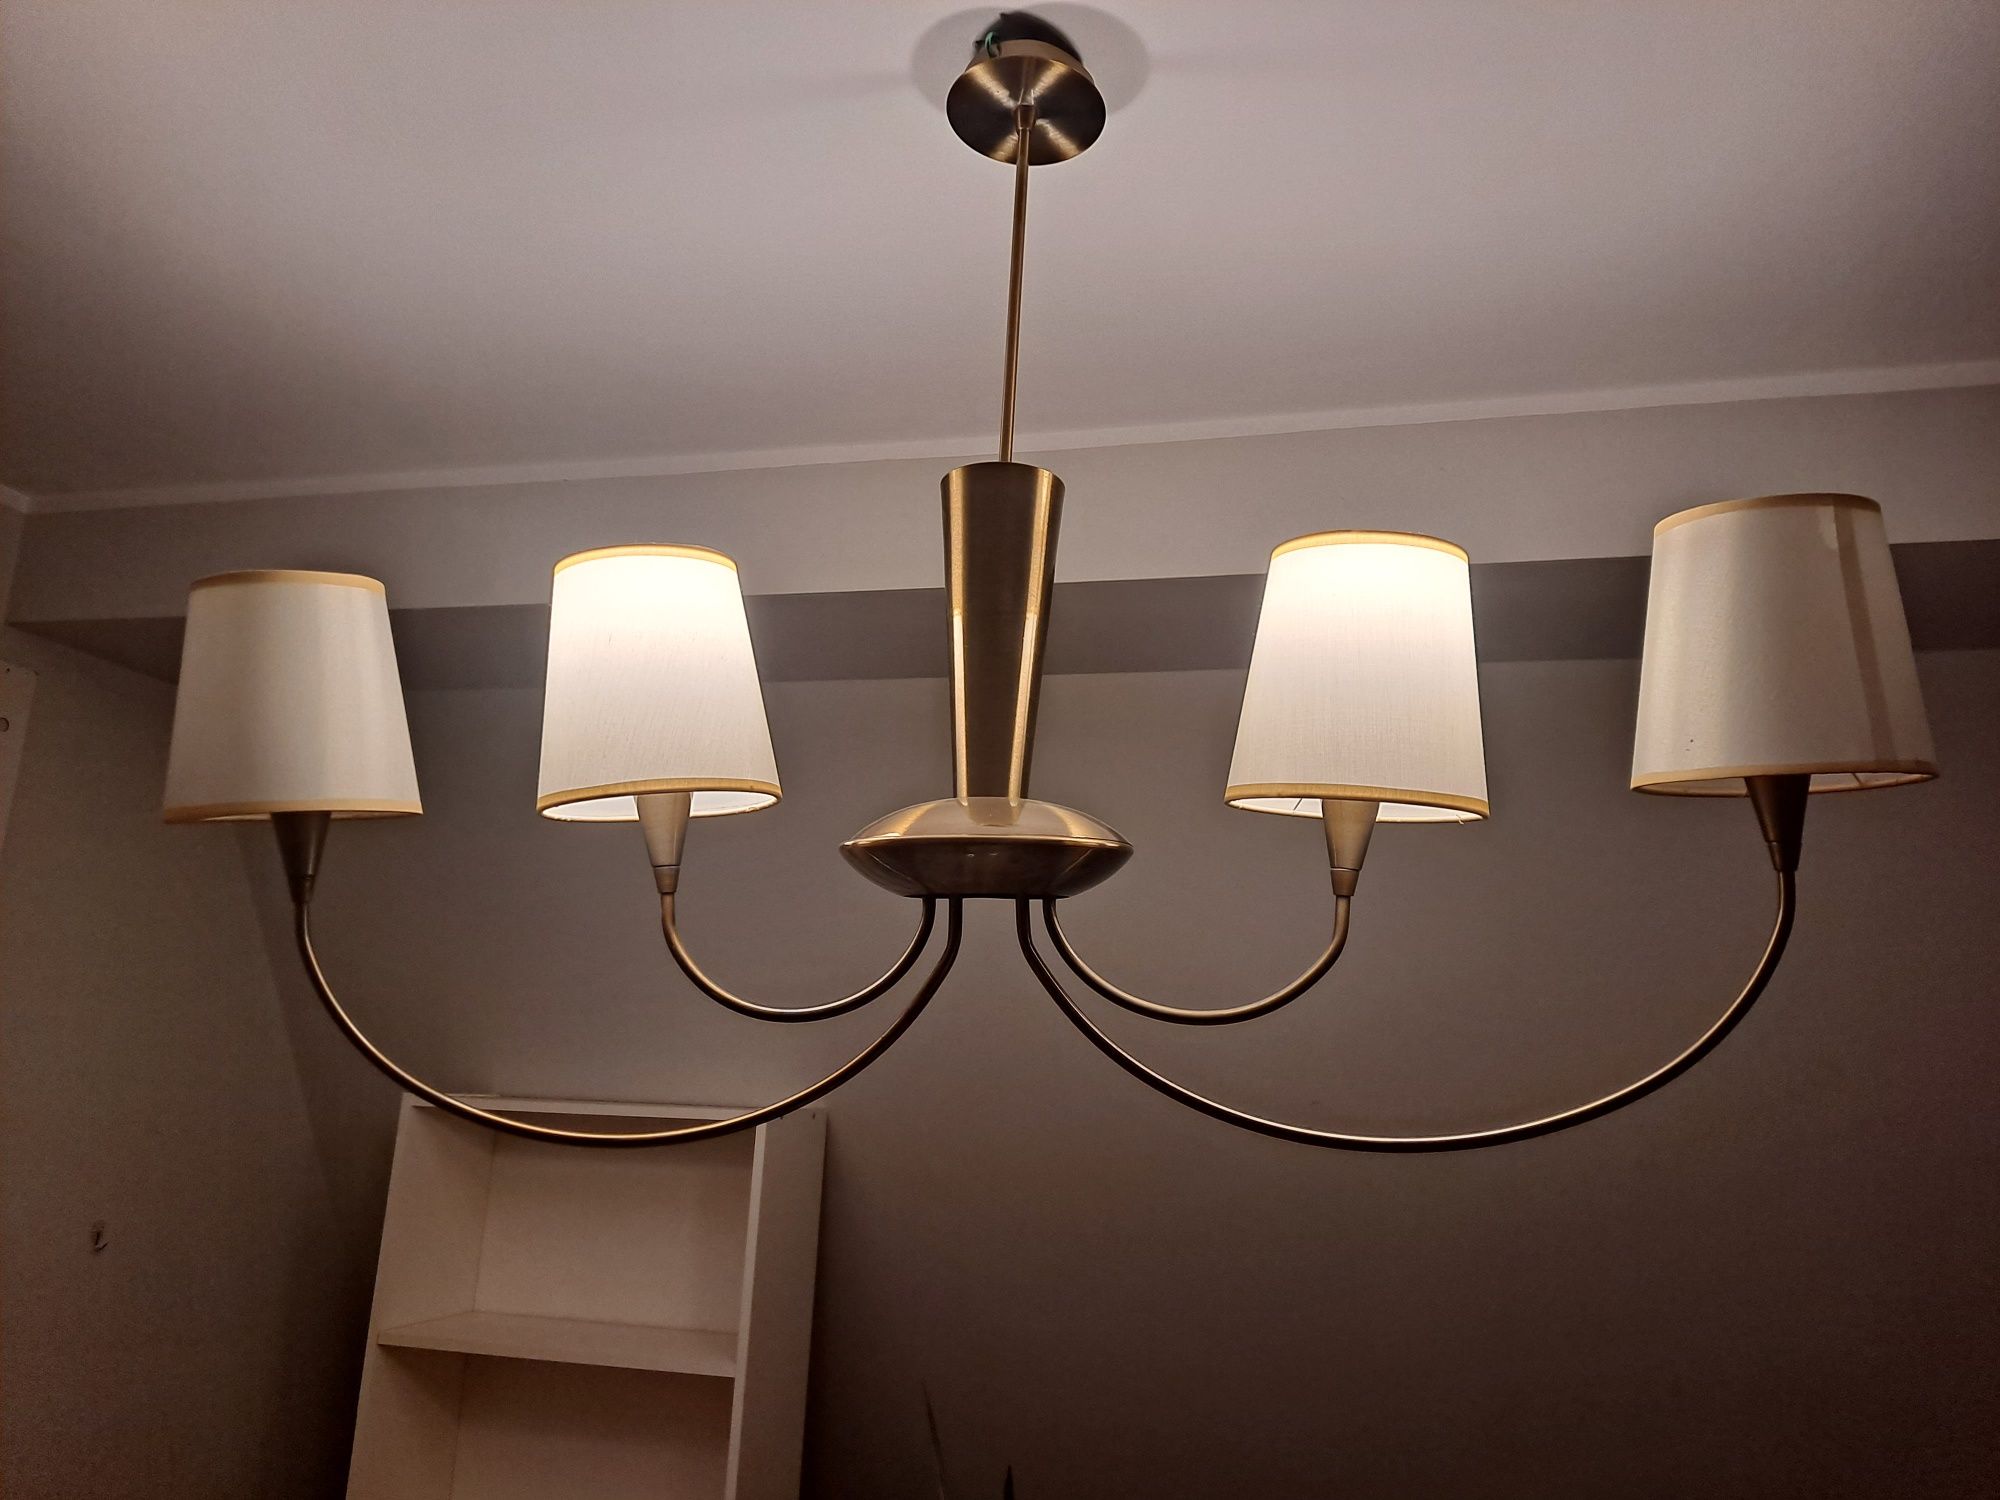 Duża i stylowa lampa